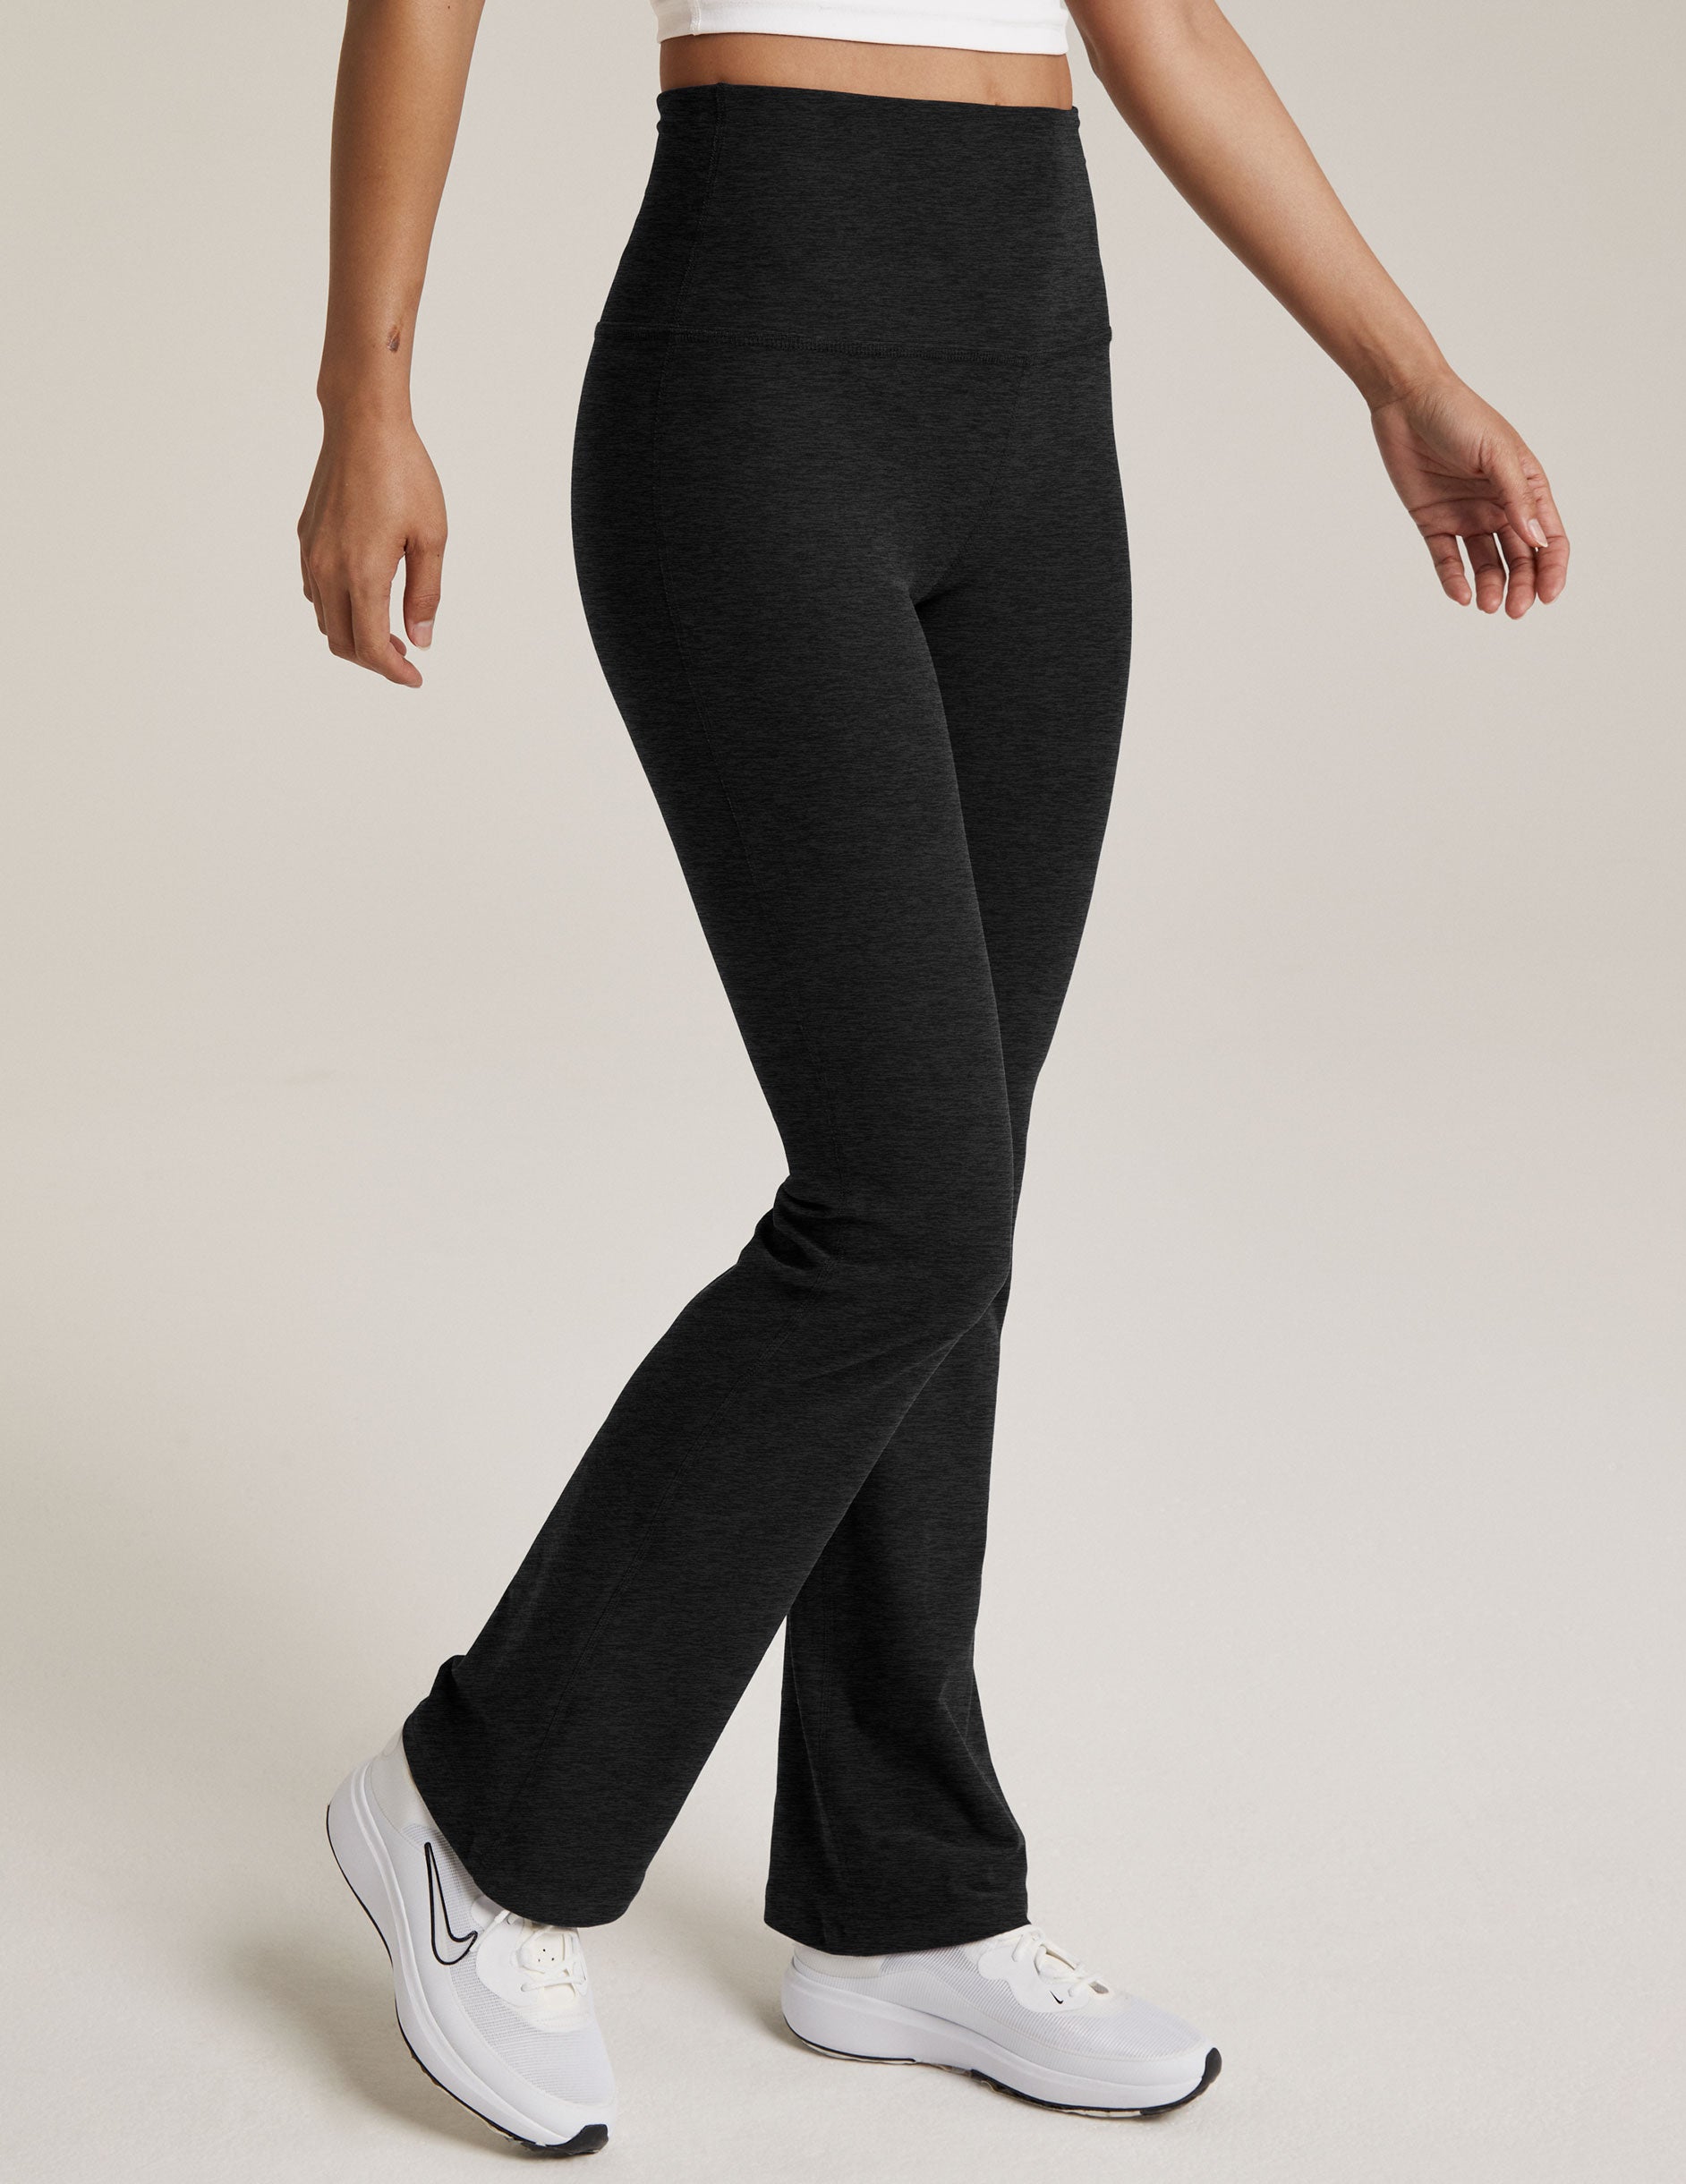 Slacks for Women: Tall lady Straight Leg Navy Pants | American Tall